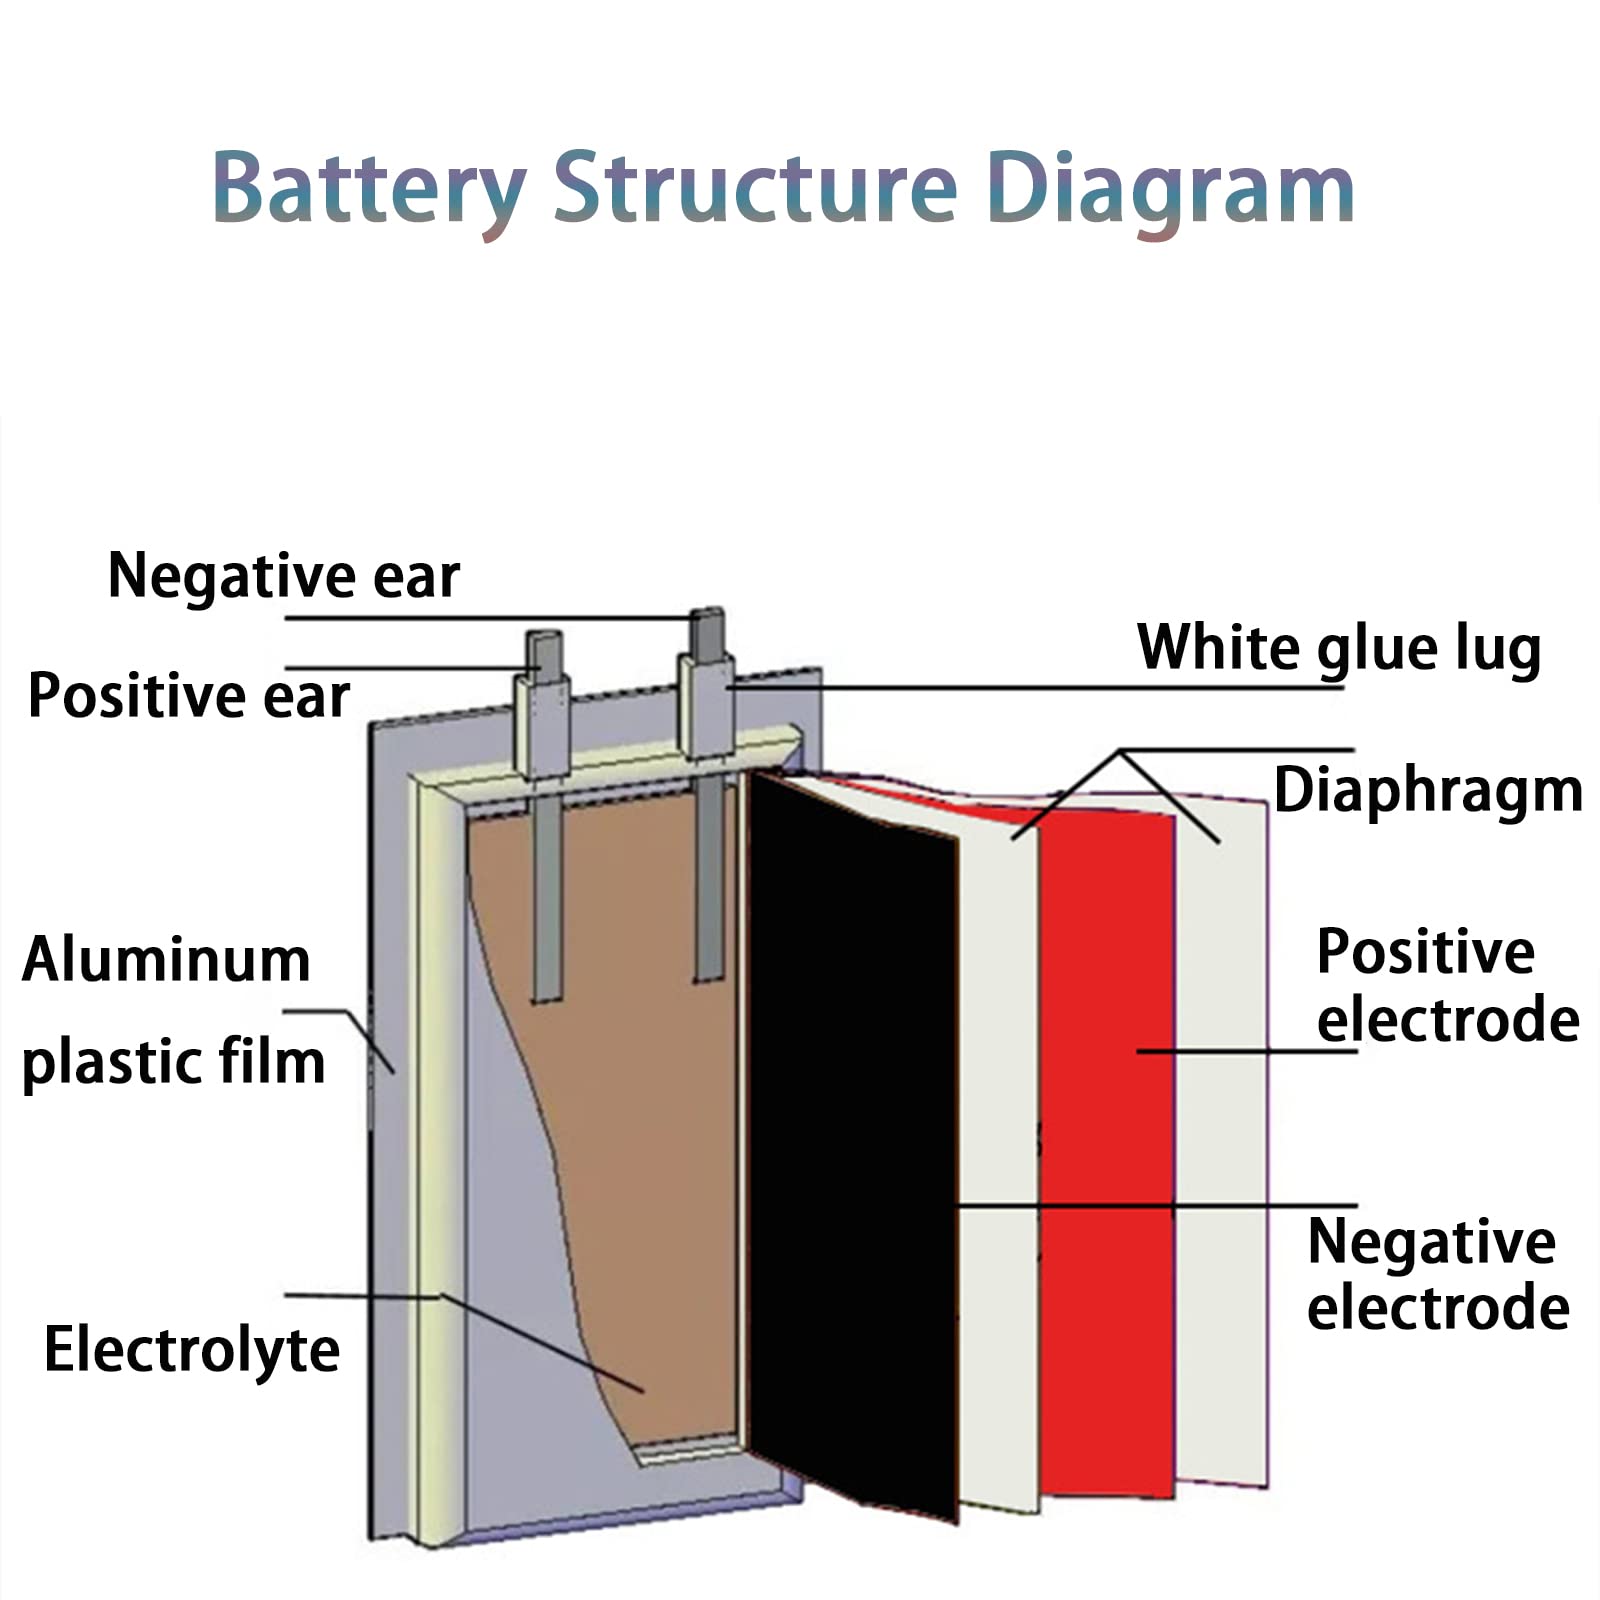 Jieoto 3.7V Household Li-Battery 300mAh 402040 Lithium Polymer ion Battery Rechargeable Lithium-ion Polymer Battery Pack with Protection Board(2 pcs)